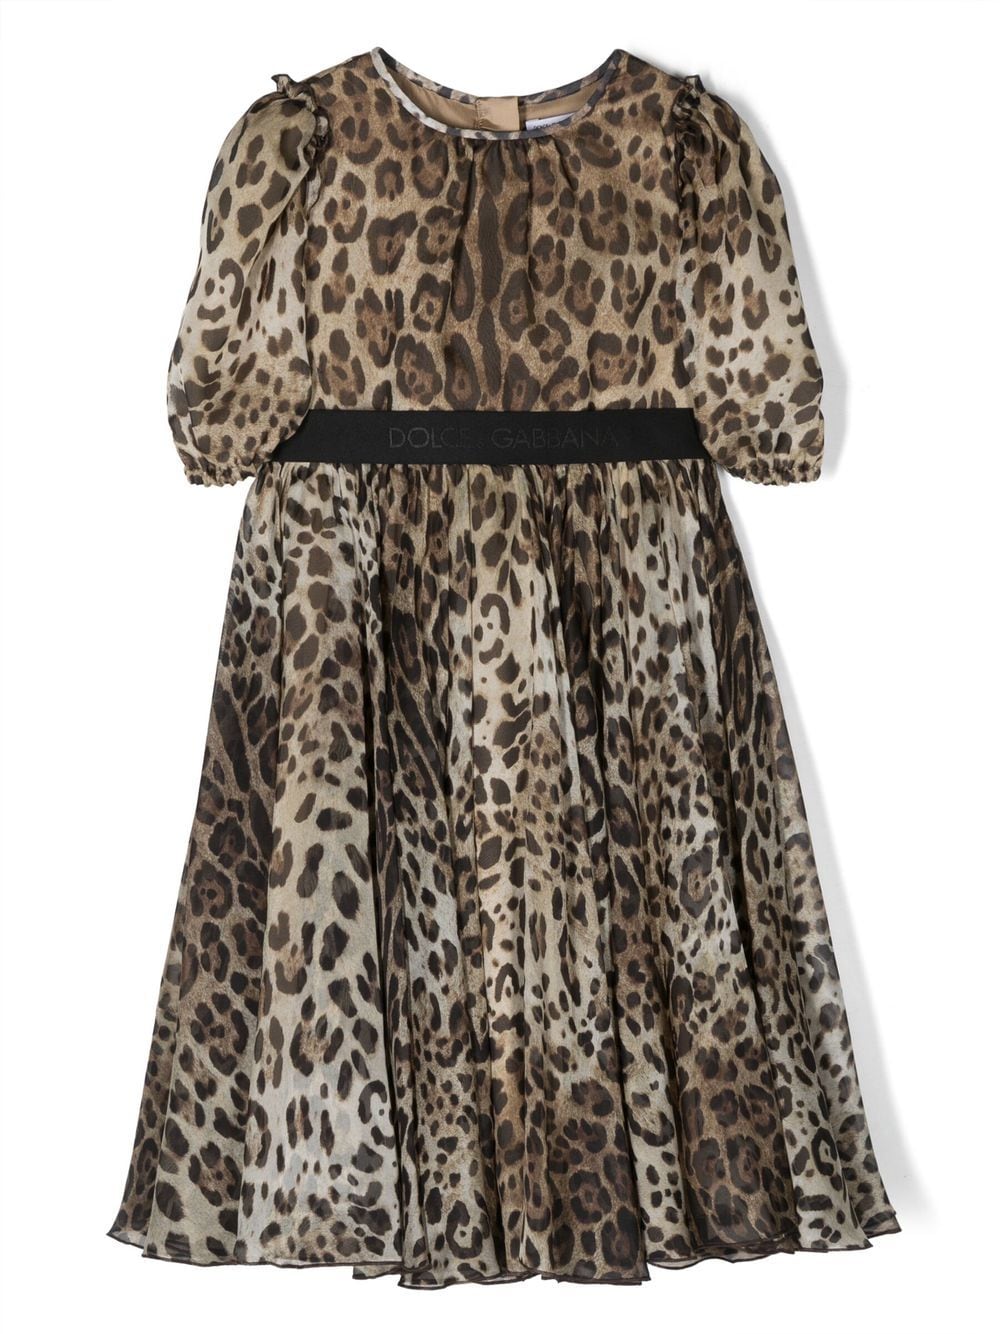 Dolce & Gabbana Kids' Leopard Dress In Animal Print